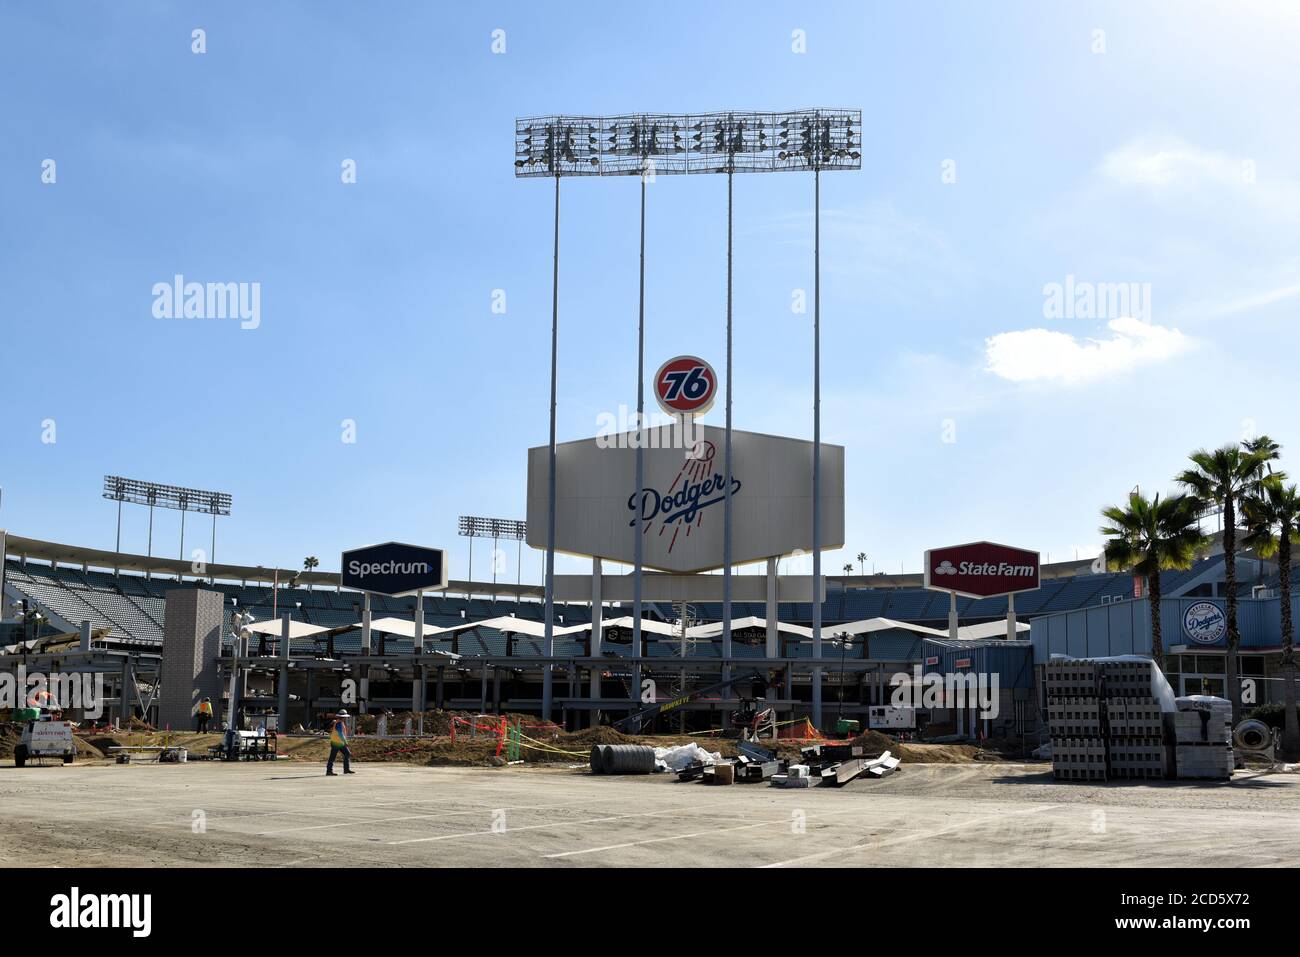 LOS ANGELES, CALIFORNIA - 12 FEB 2020: Construction at Dodger Stadium during the off season. Stock Photo